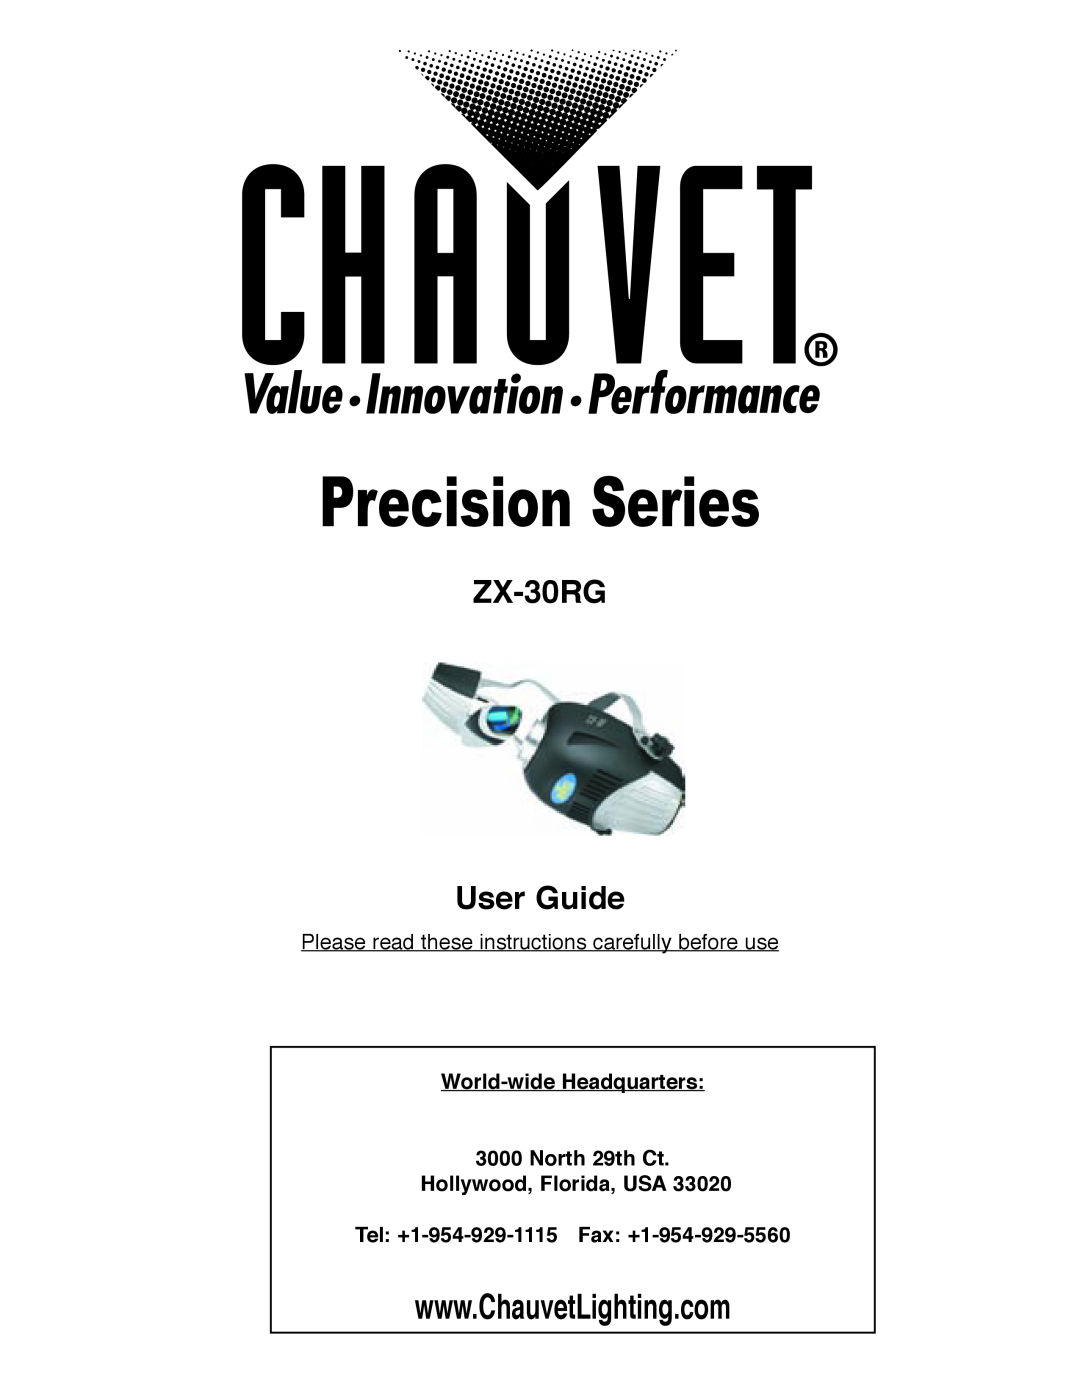 Chauvet ZX-30RG manual World-wideHeadquarters 3000 North 29th Ct, Hollywood, Florida, USA, Precision Series 